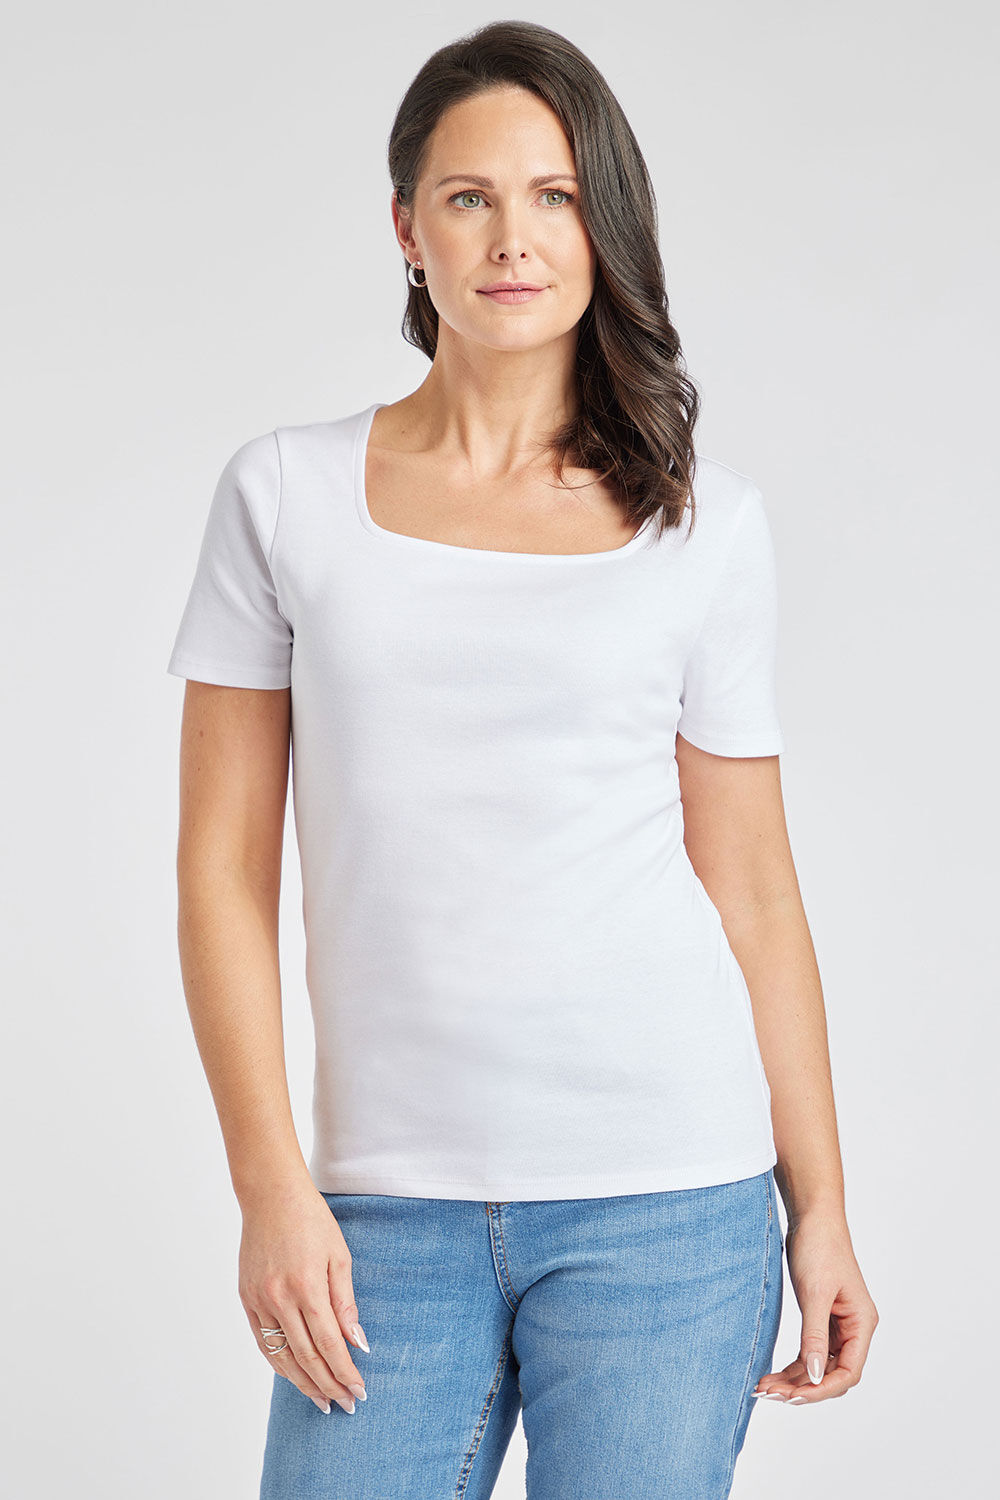 Bonmarche White Square Neck Plain T-Shirt, Size: 16